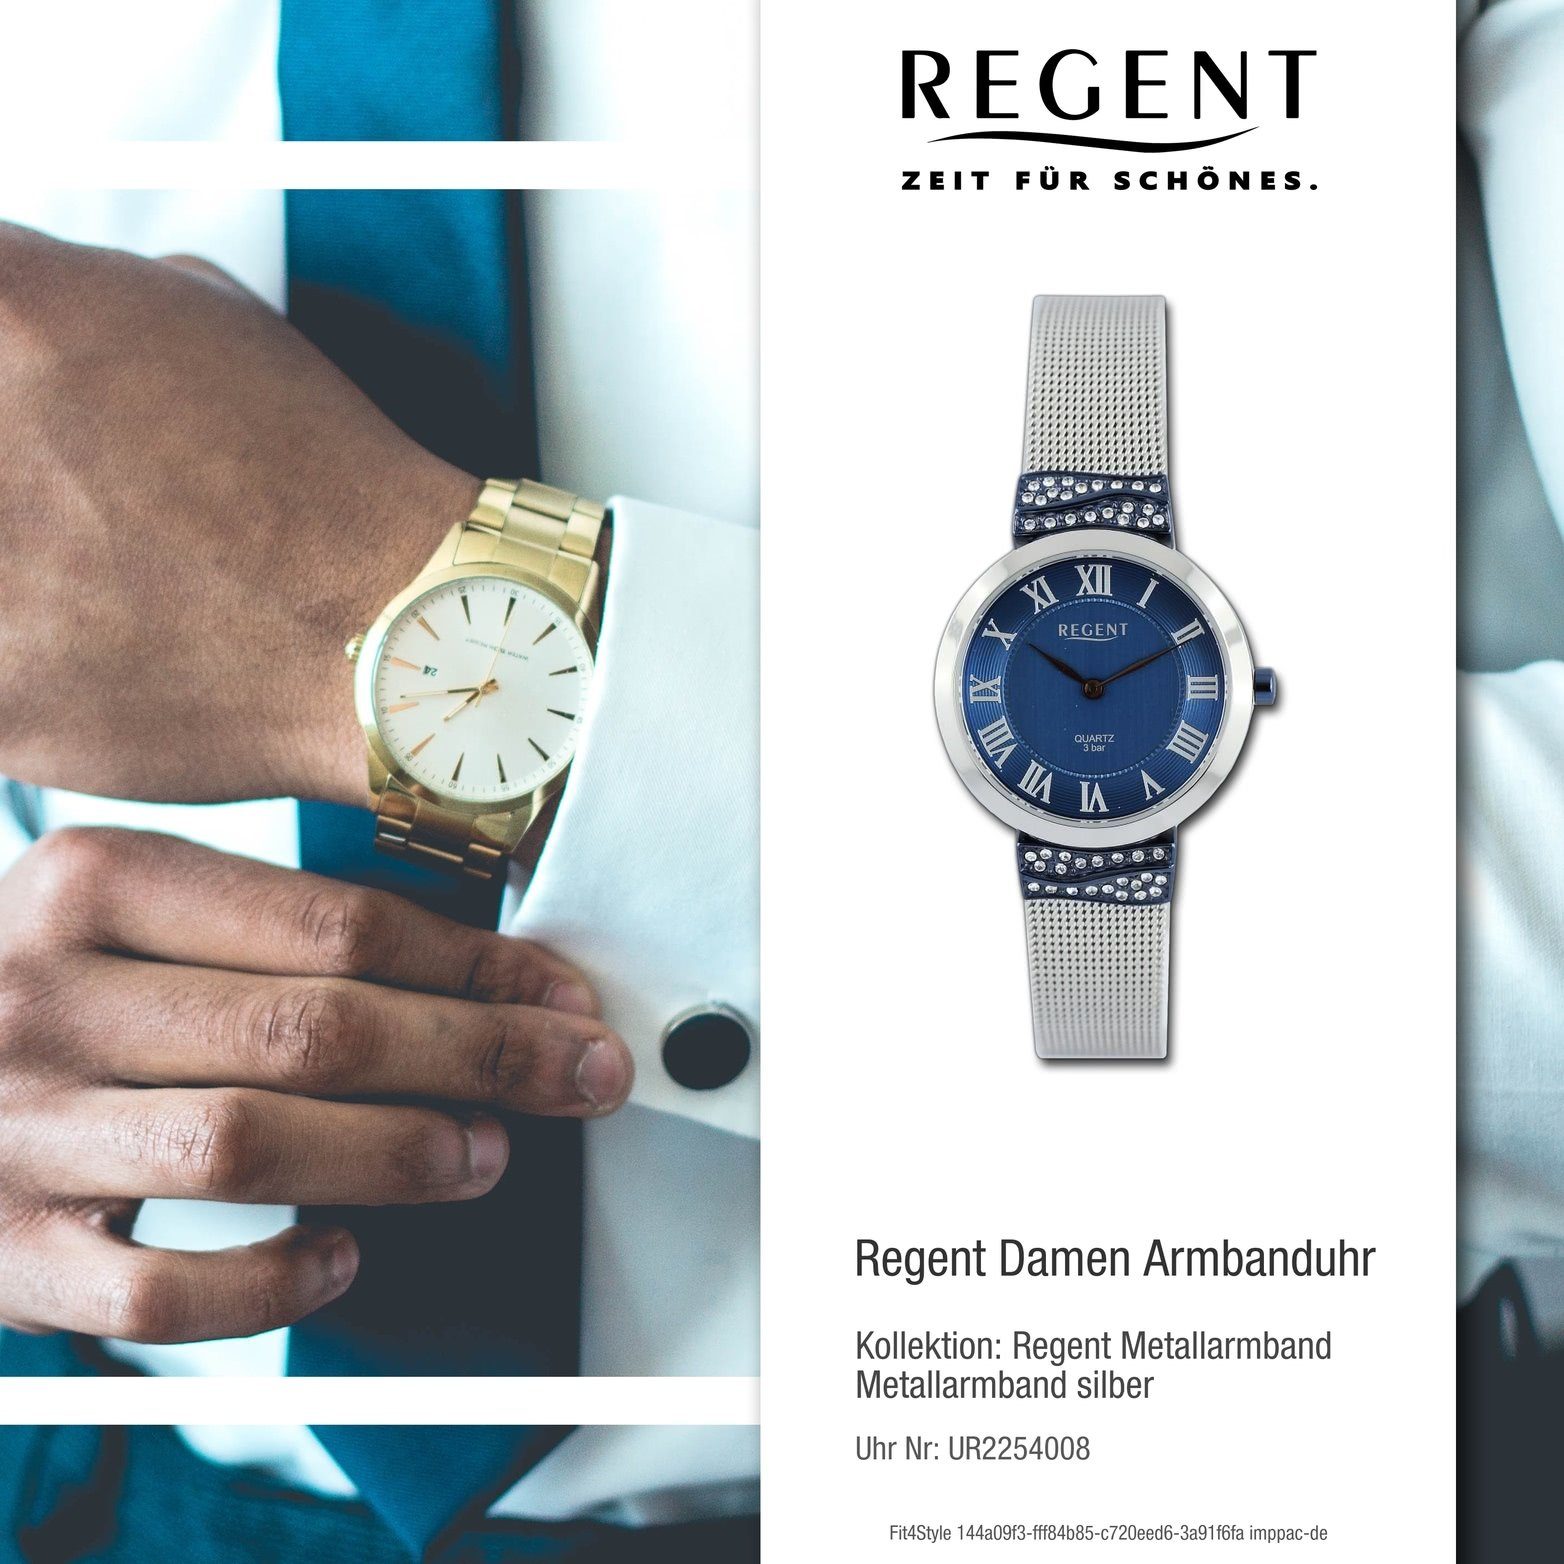 Damenuhr (30mm) Armbanduhr Quarzuhr Metallarmband dunkelblau, Gehäuse, Analog, Damen silber, groß Regent rundes Regent